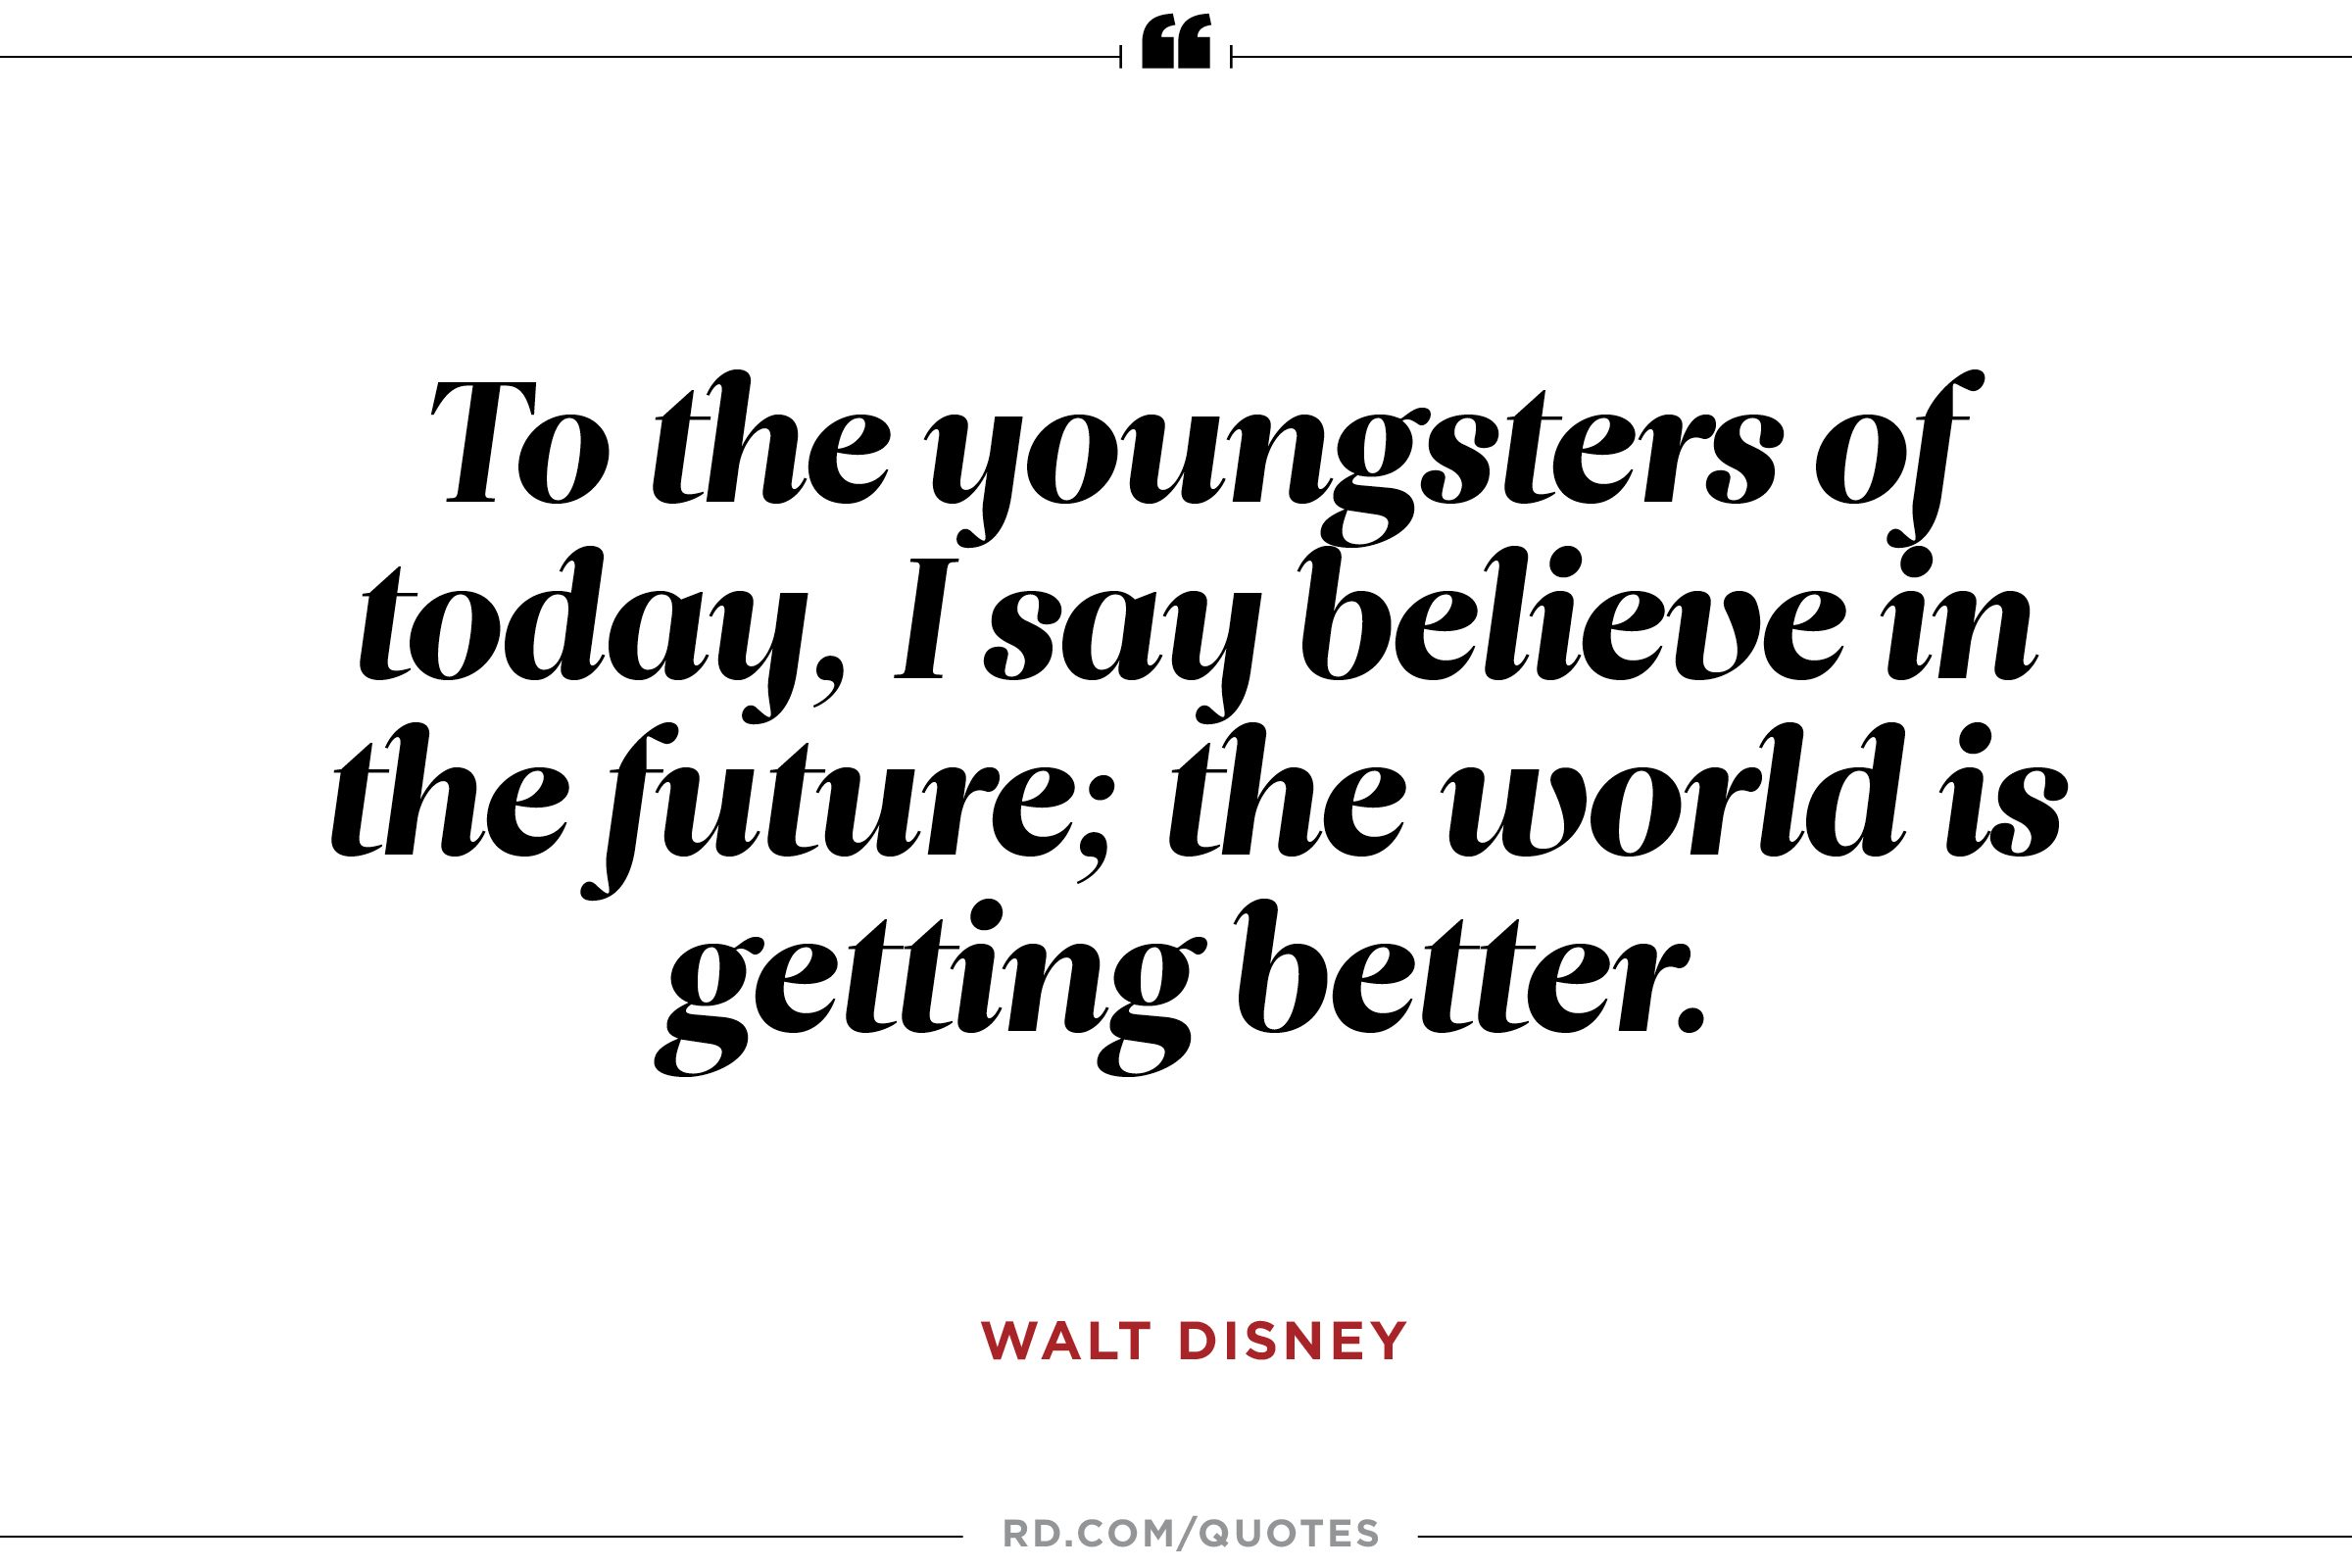 11 Inspiring Walt Disney Quotes | Reader's Digest